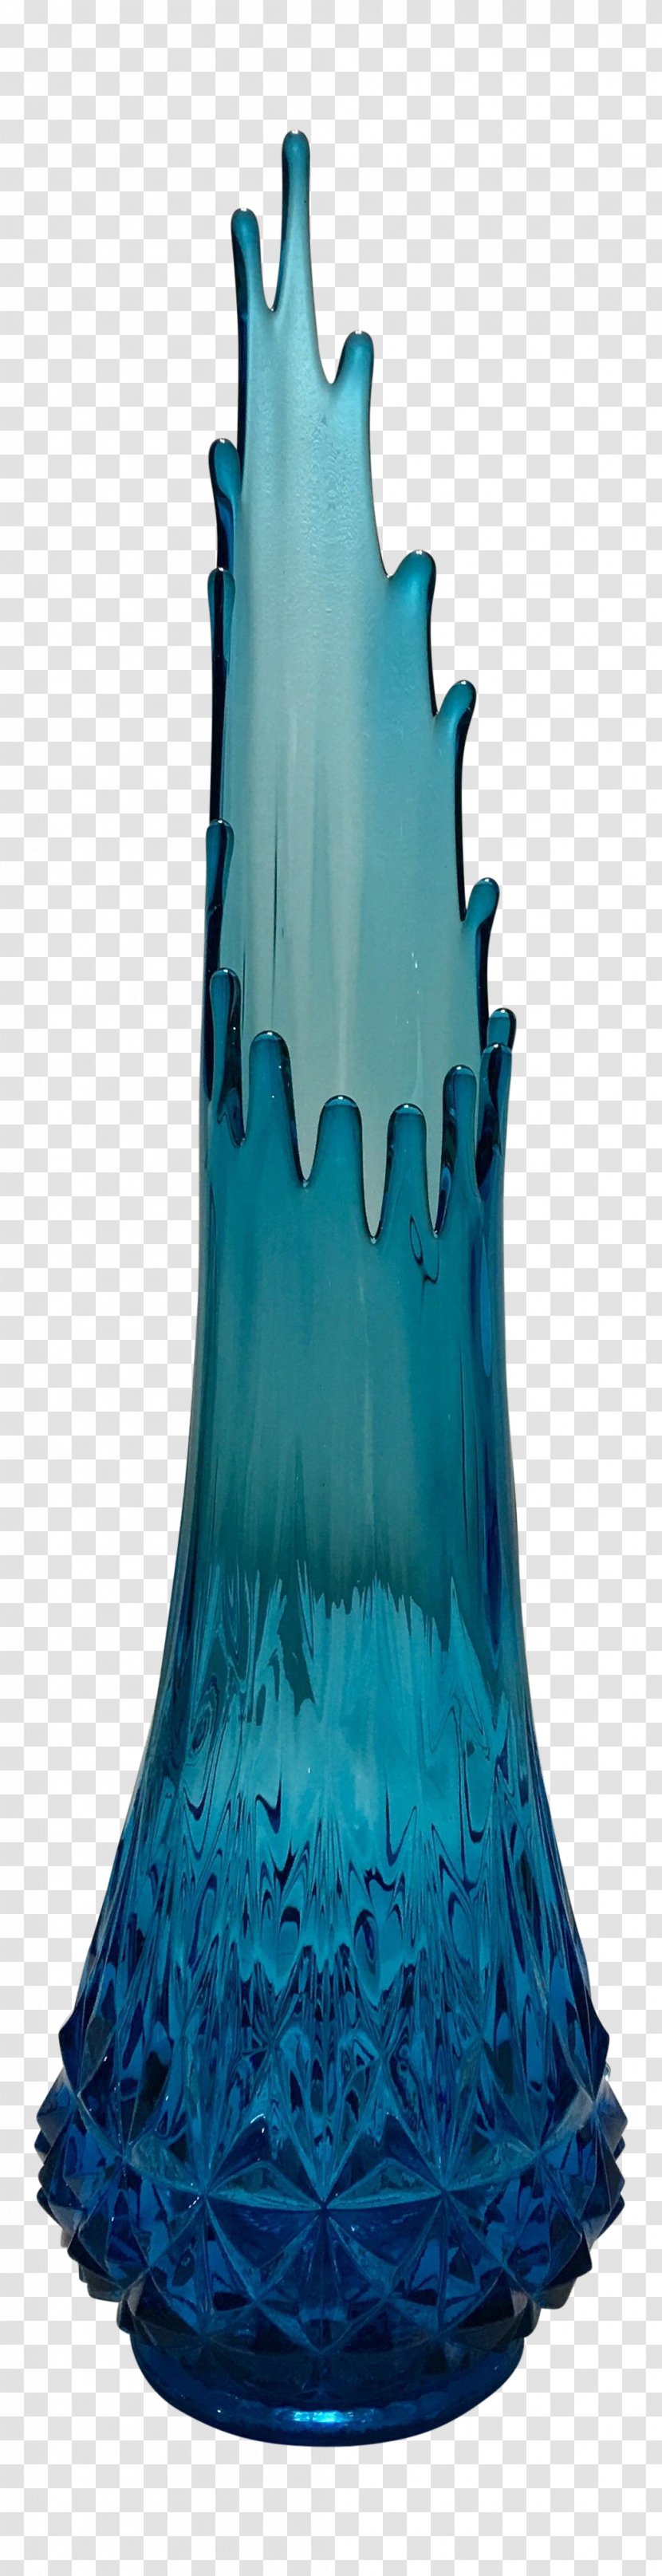 Vase Glass Blue Chairish Vikings Transparent PNG